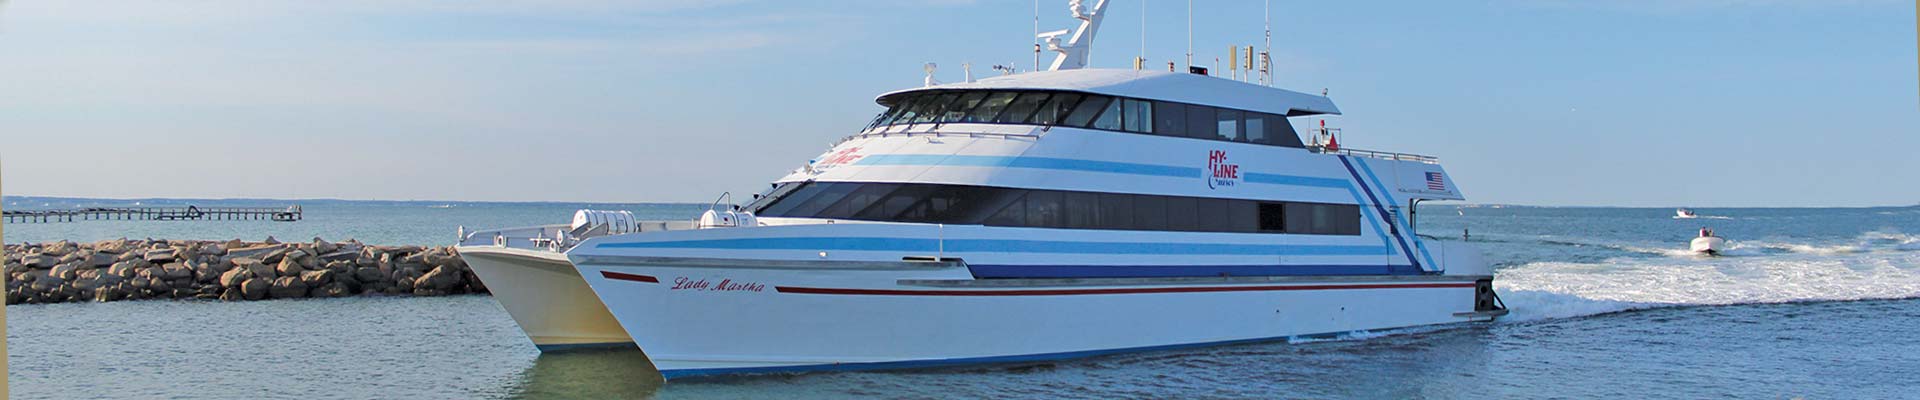 Martha's Vineyard Ferry Schedule | Hy-Line Cruises